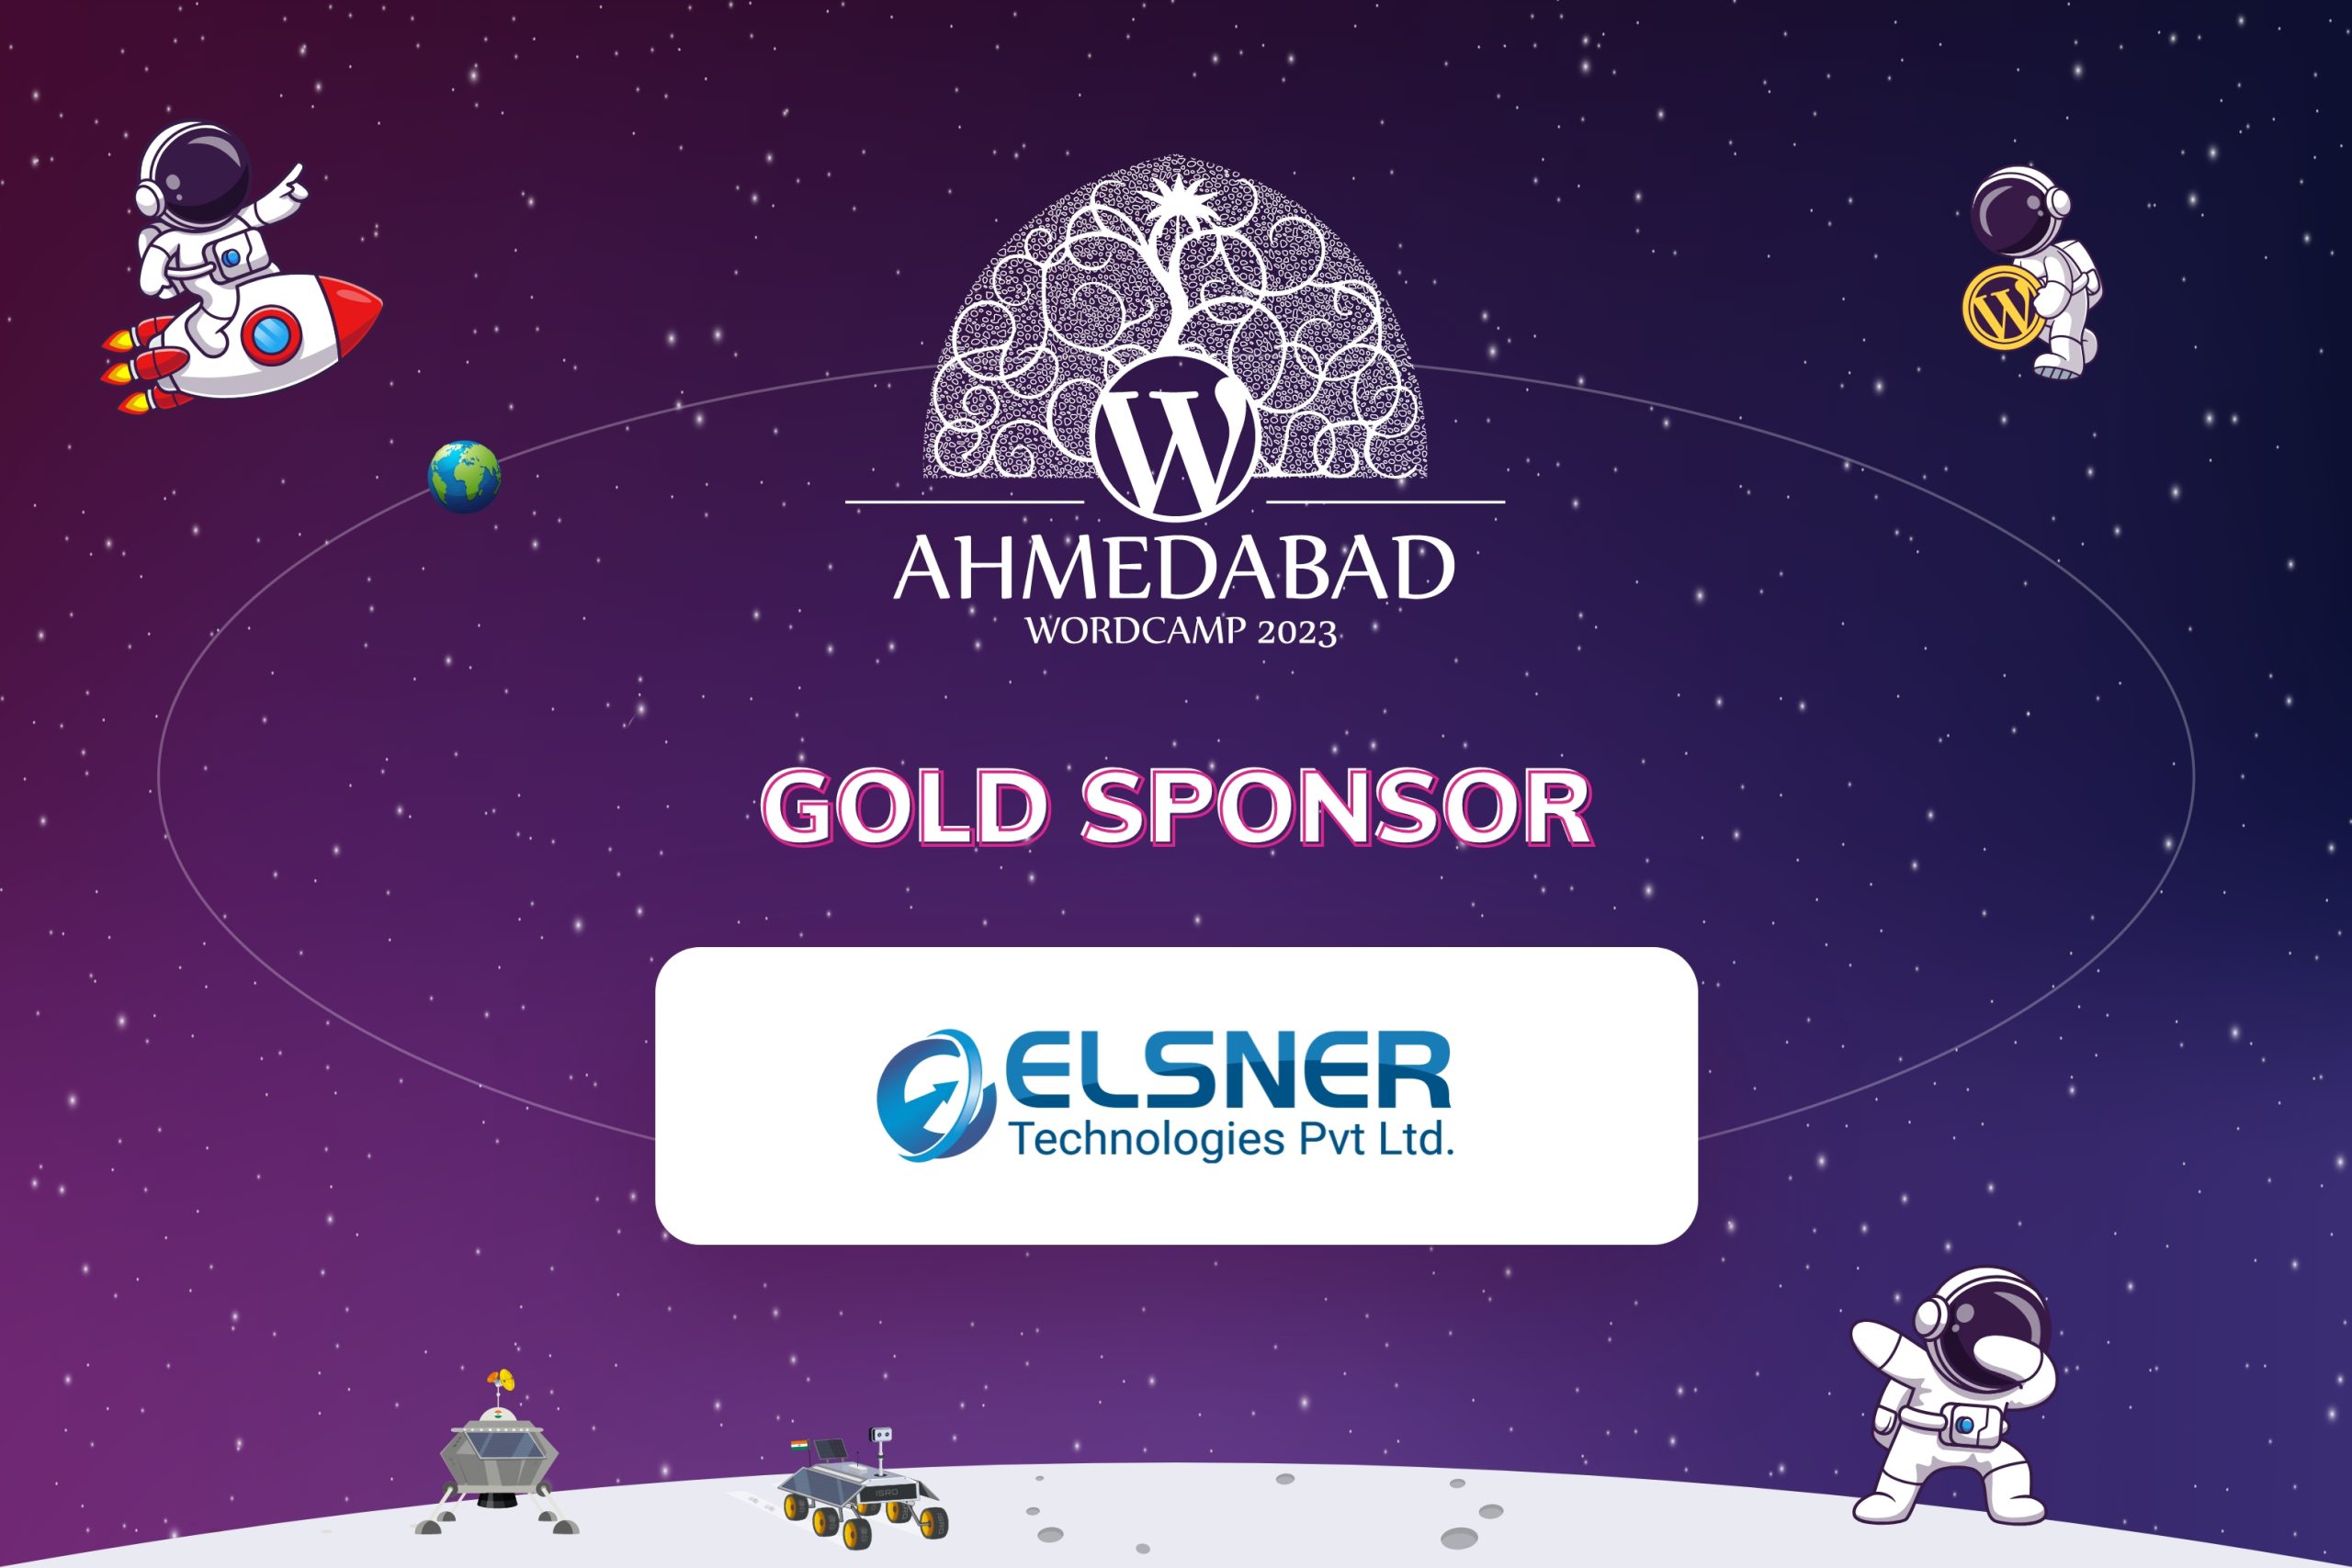 Thank You Elsner Technologies Pvt. Ltd., for being our Gold Sponsor 